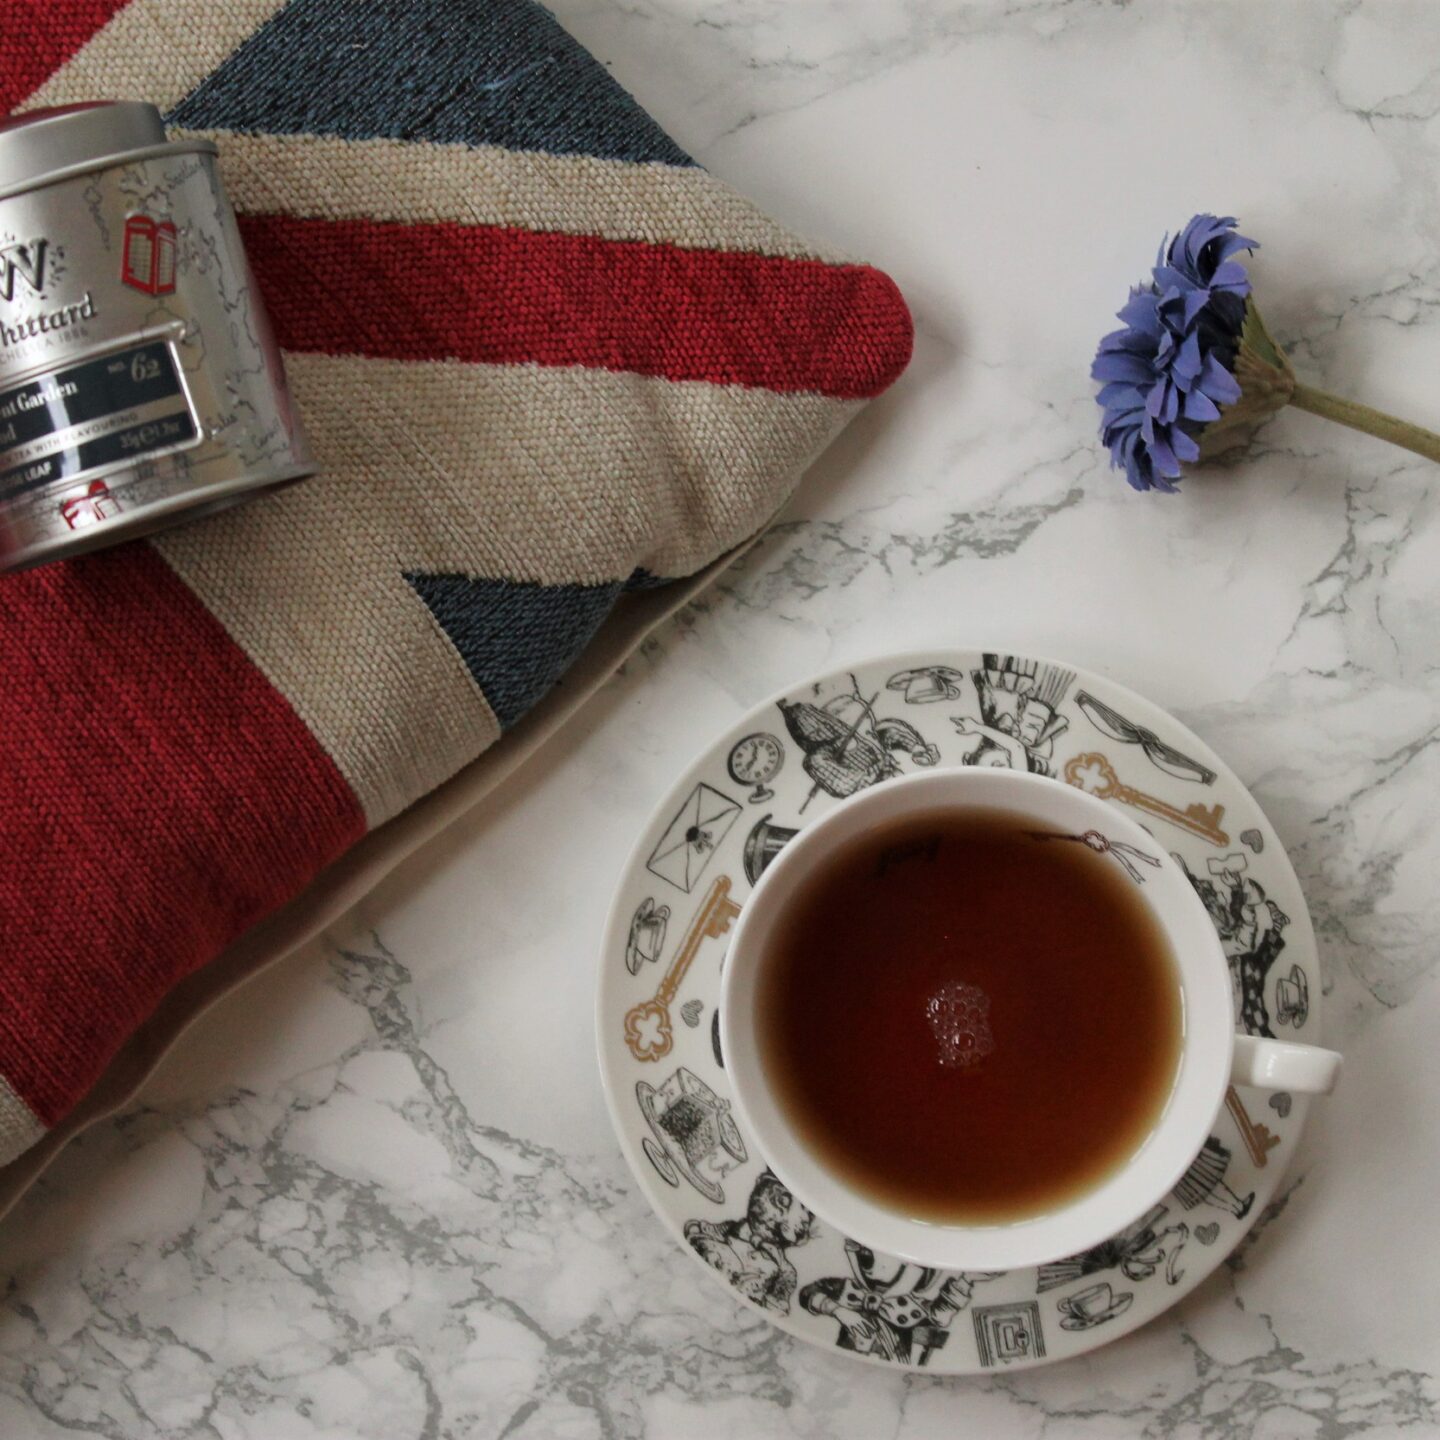 Whittard Covent Garden Tea Review